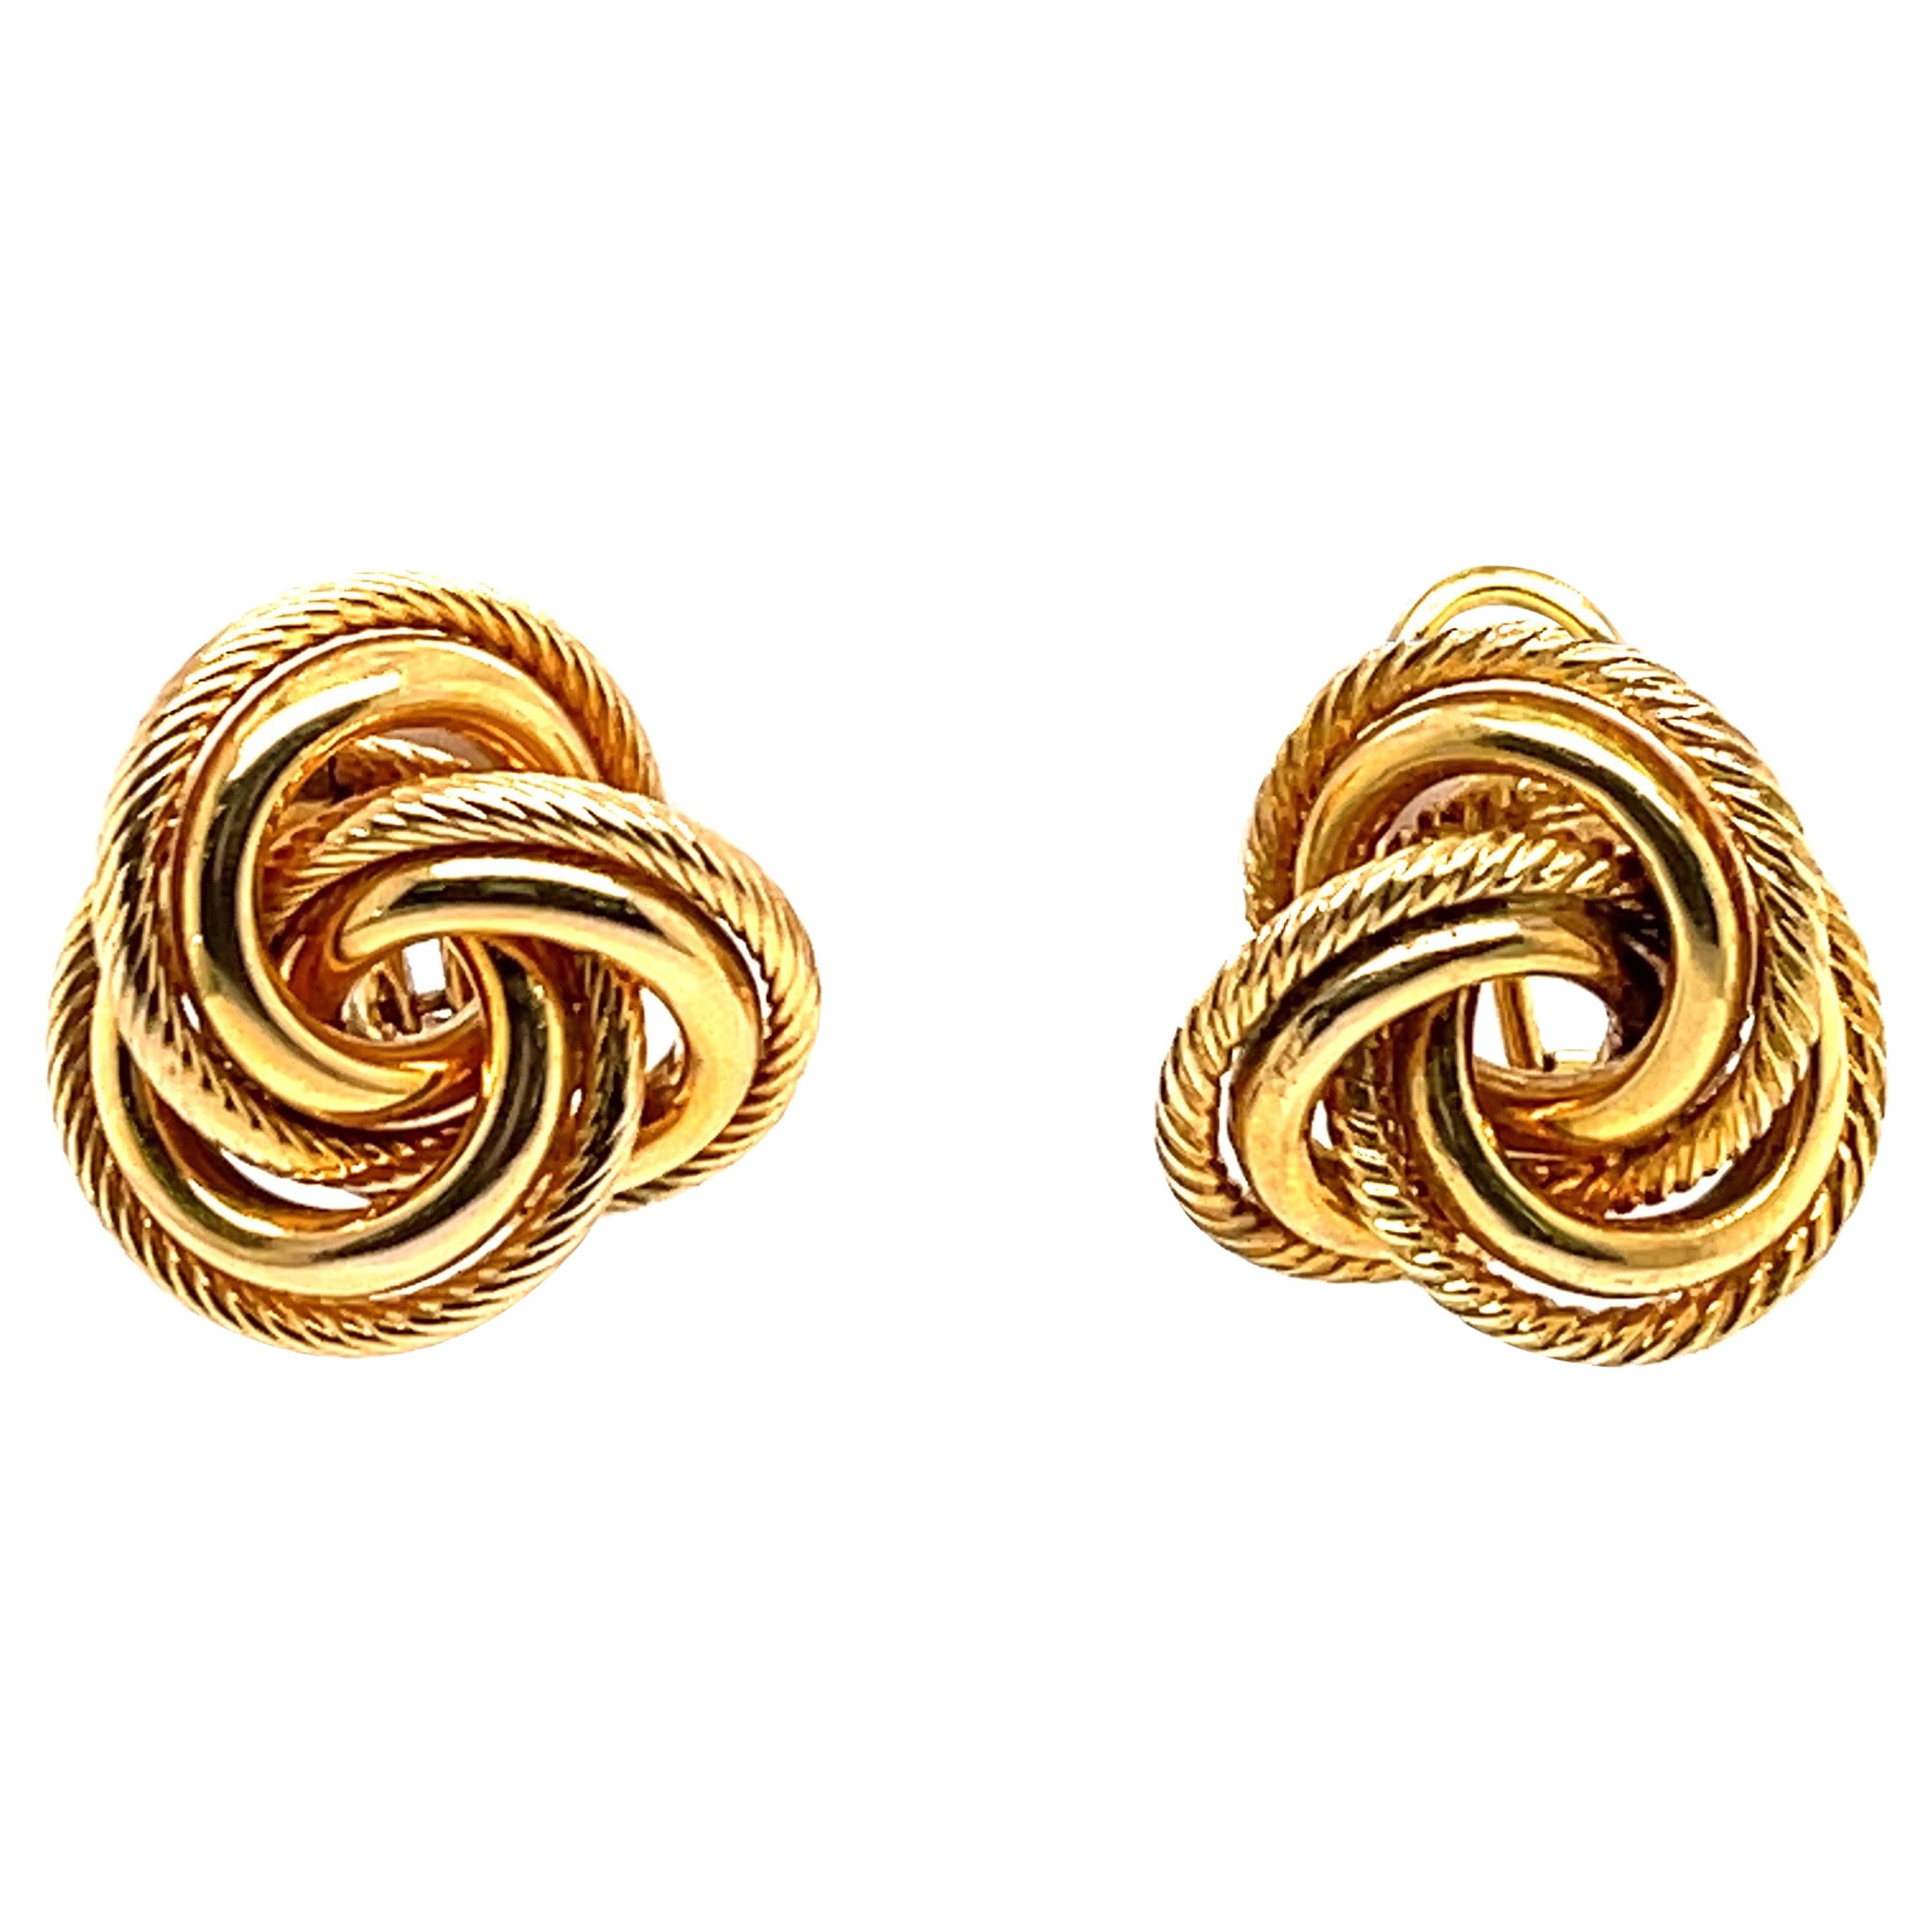 Goldwirbel-Ohrring